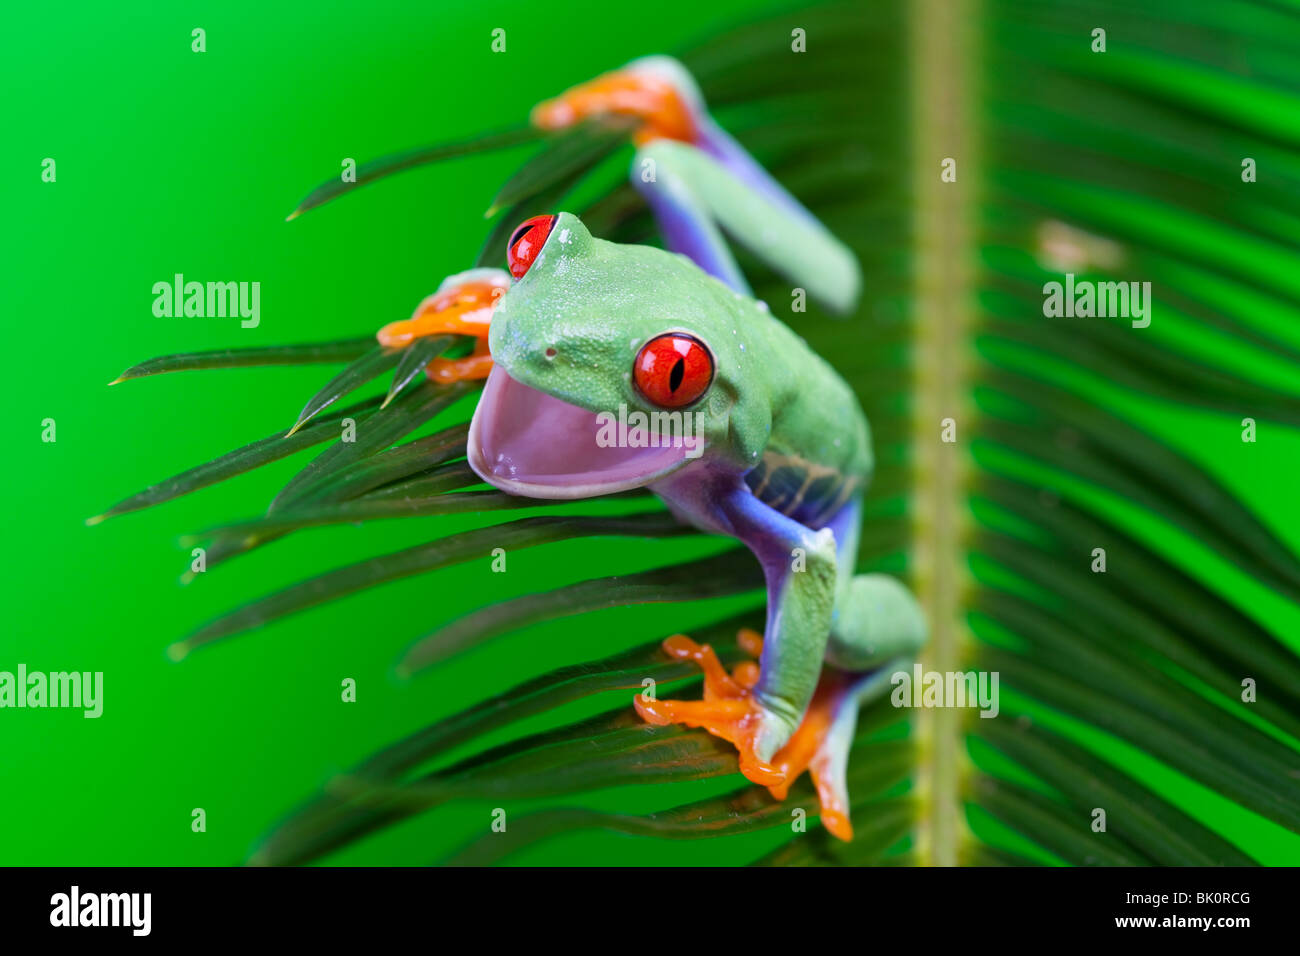 Red eyed tree frog assis sur feuille verte Banque D'Images